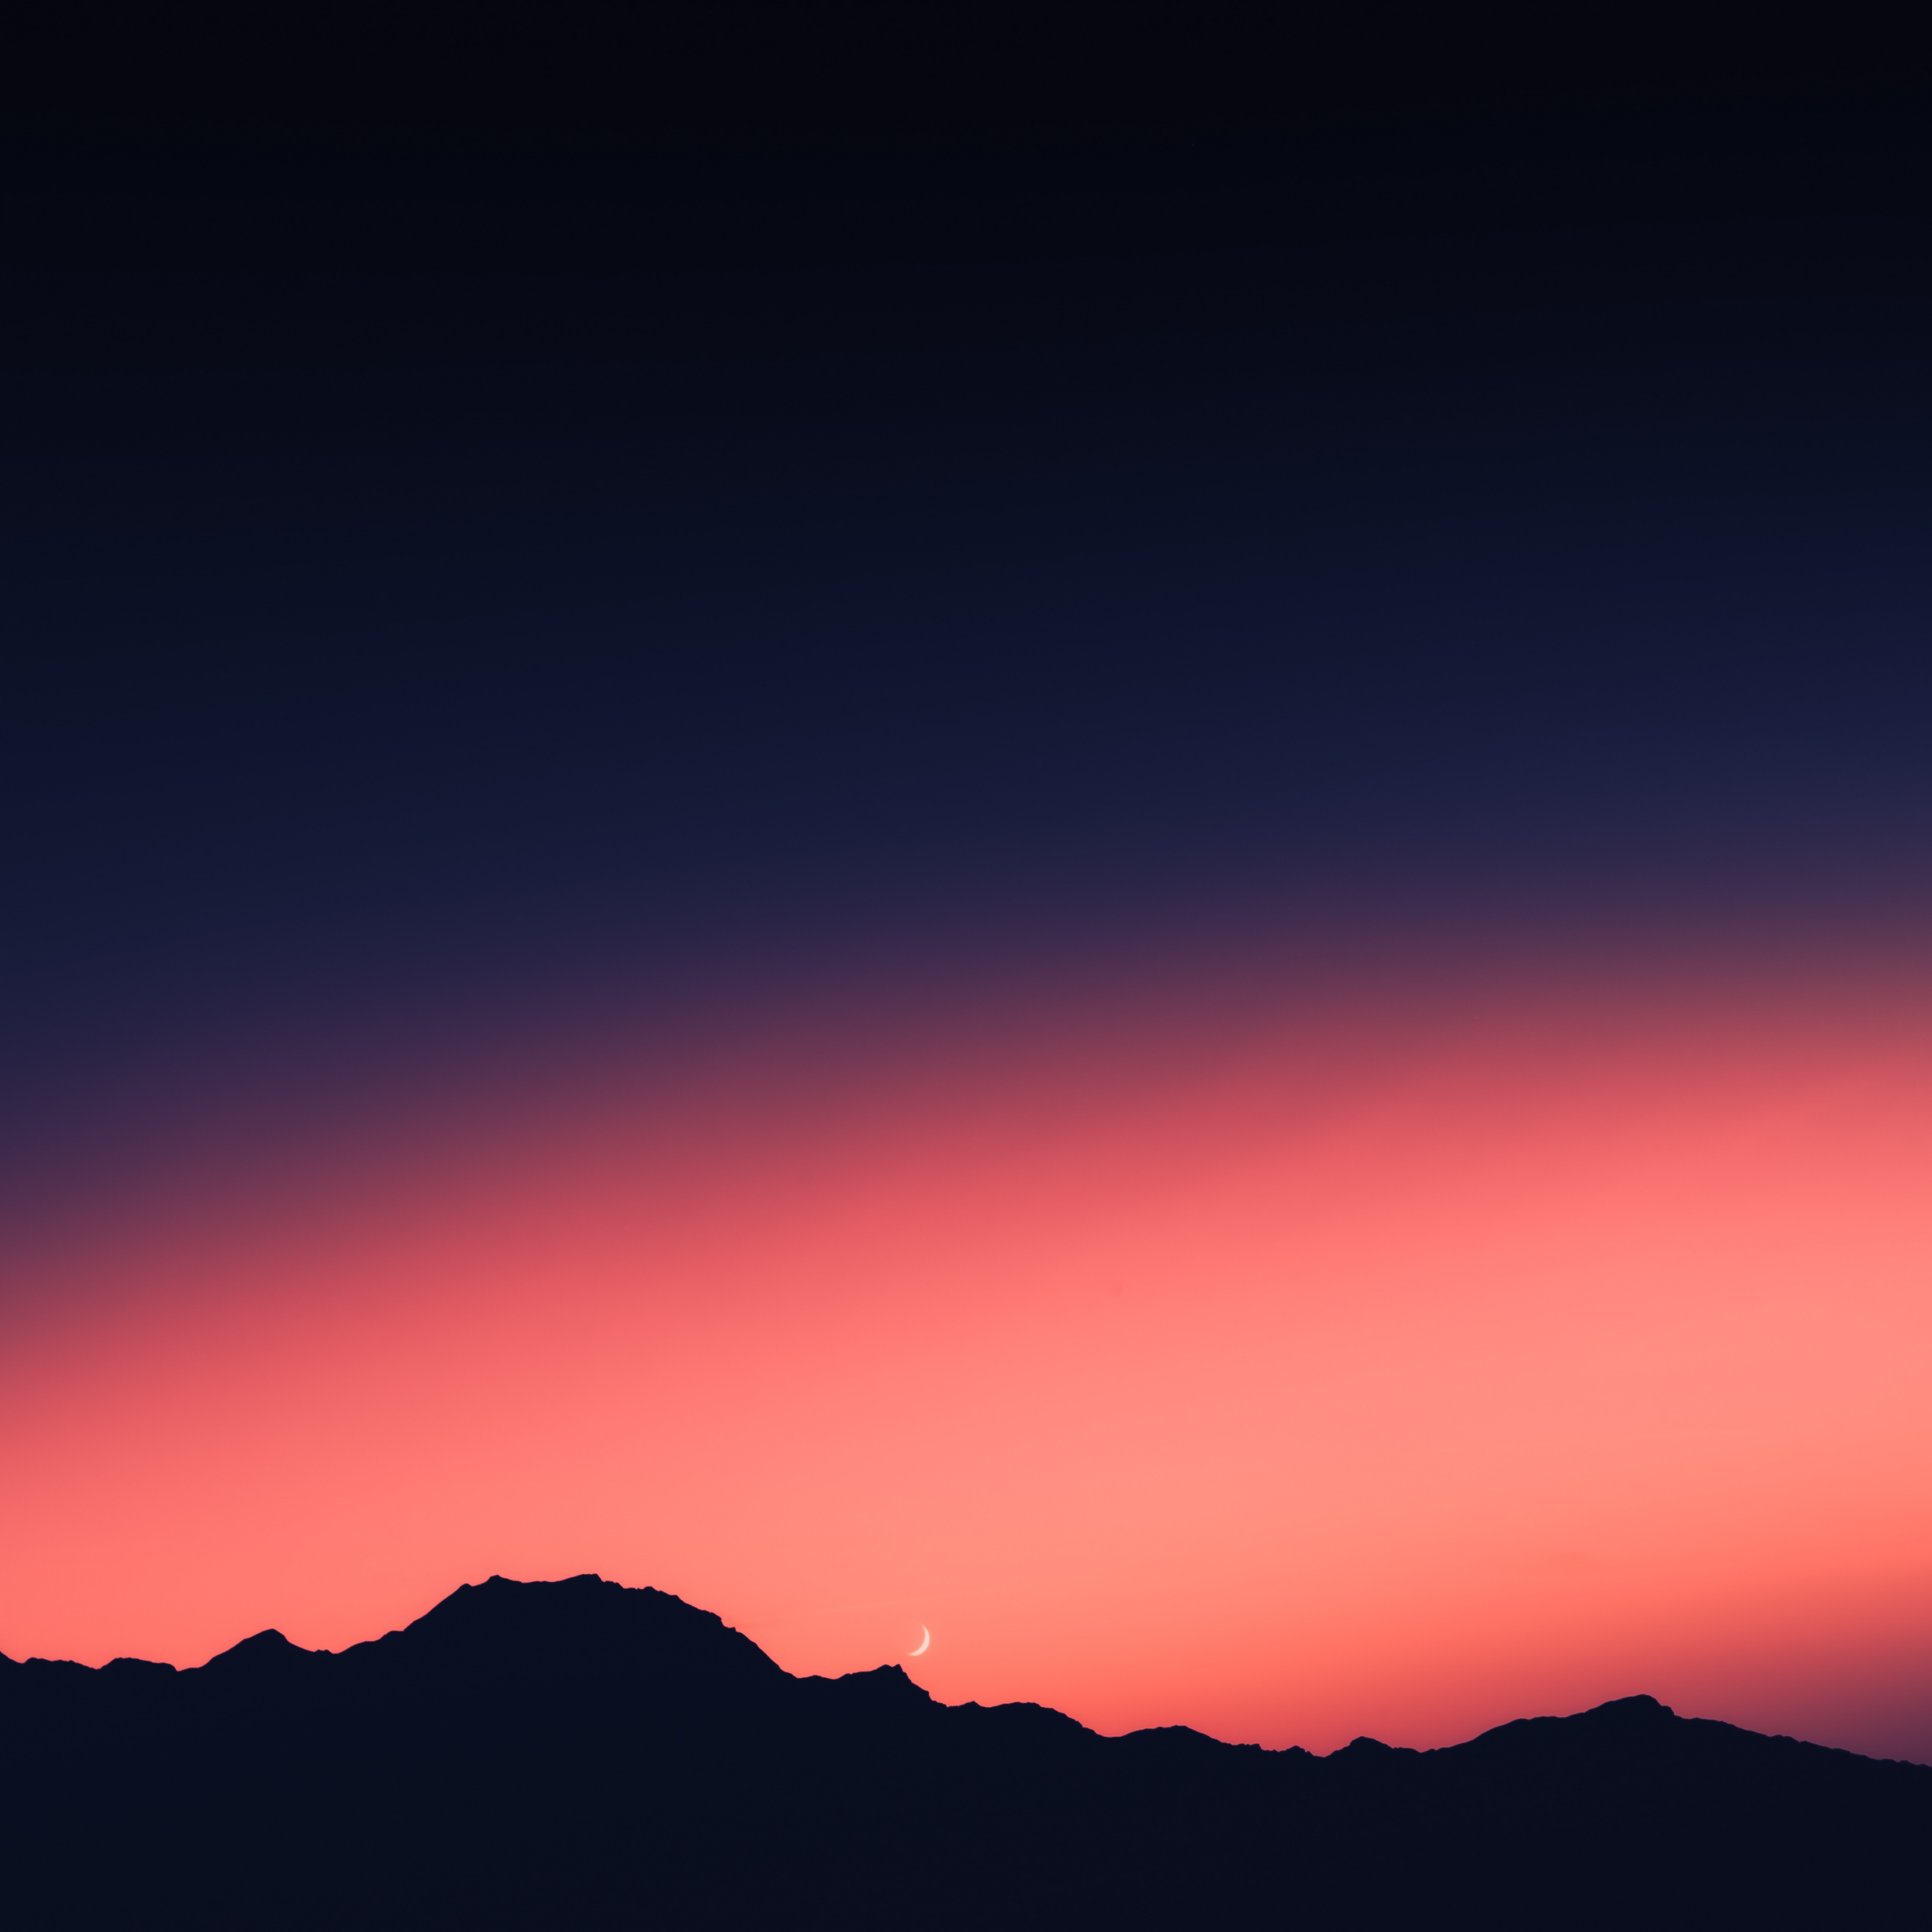 Silhouette Mountain Wallpaper 4k Sunset Orange Sky Mountain Range